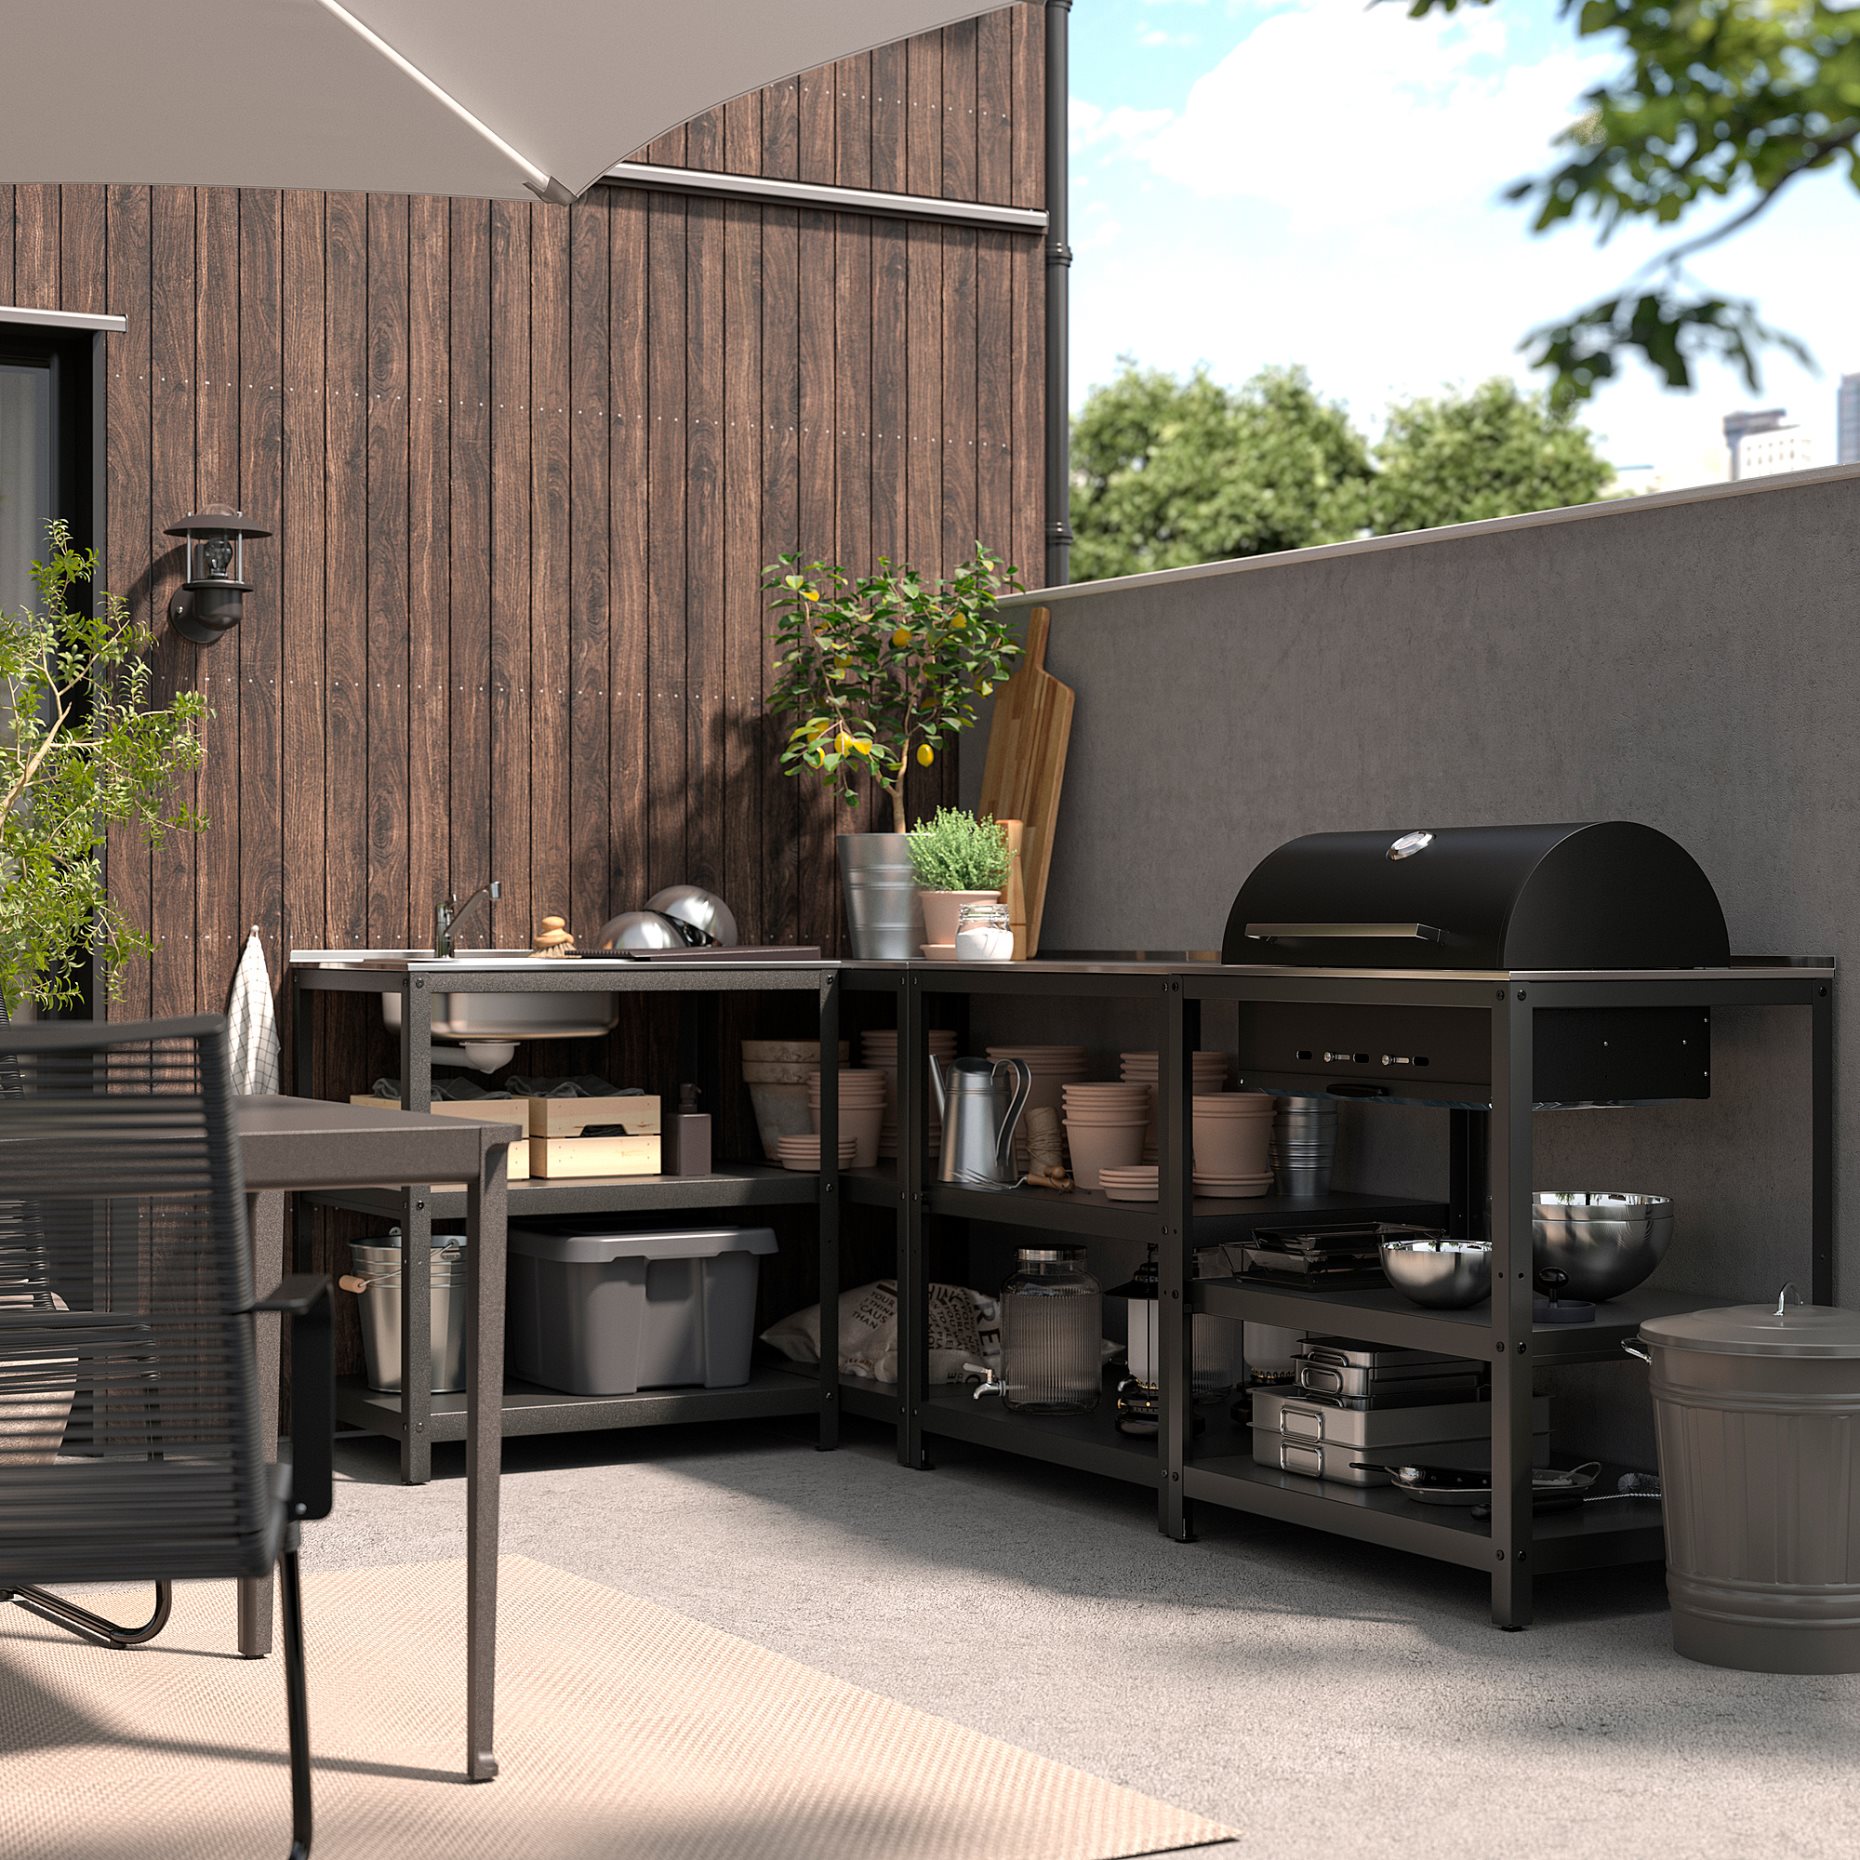 GRILLSKÄR, kitchen sink unit/charcoal barbecue/outdoor, 258x147 cm, 994.964.45